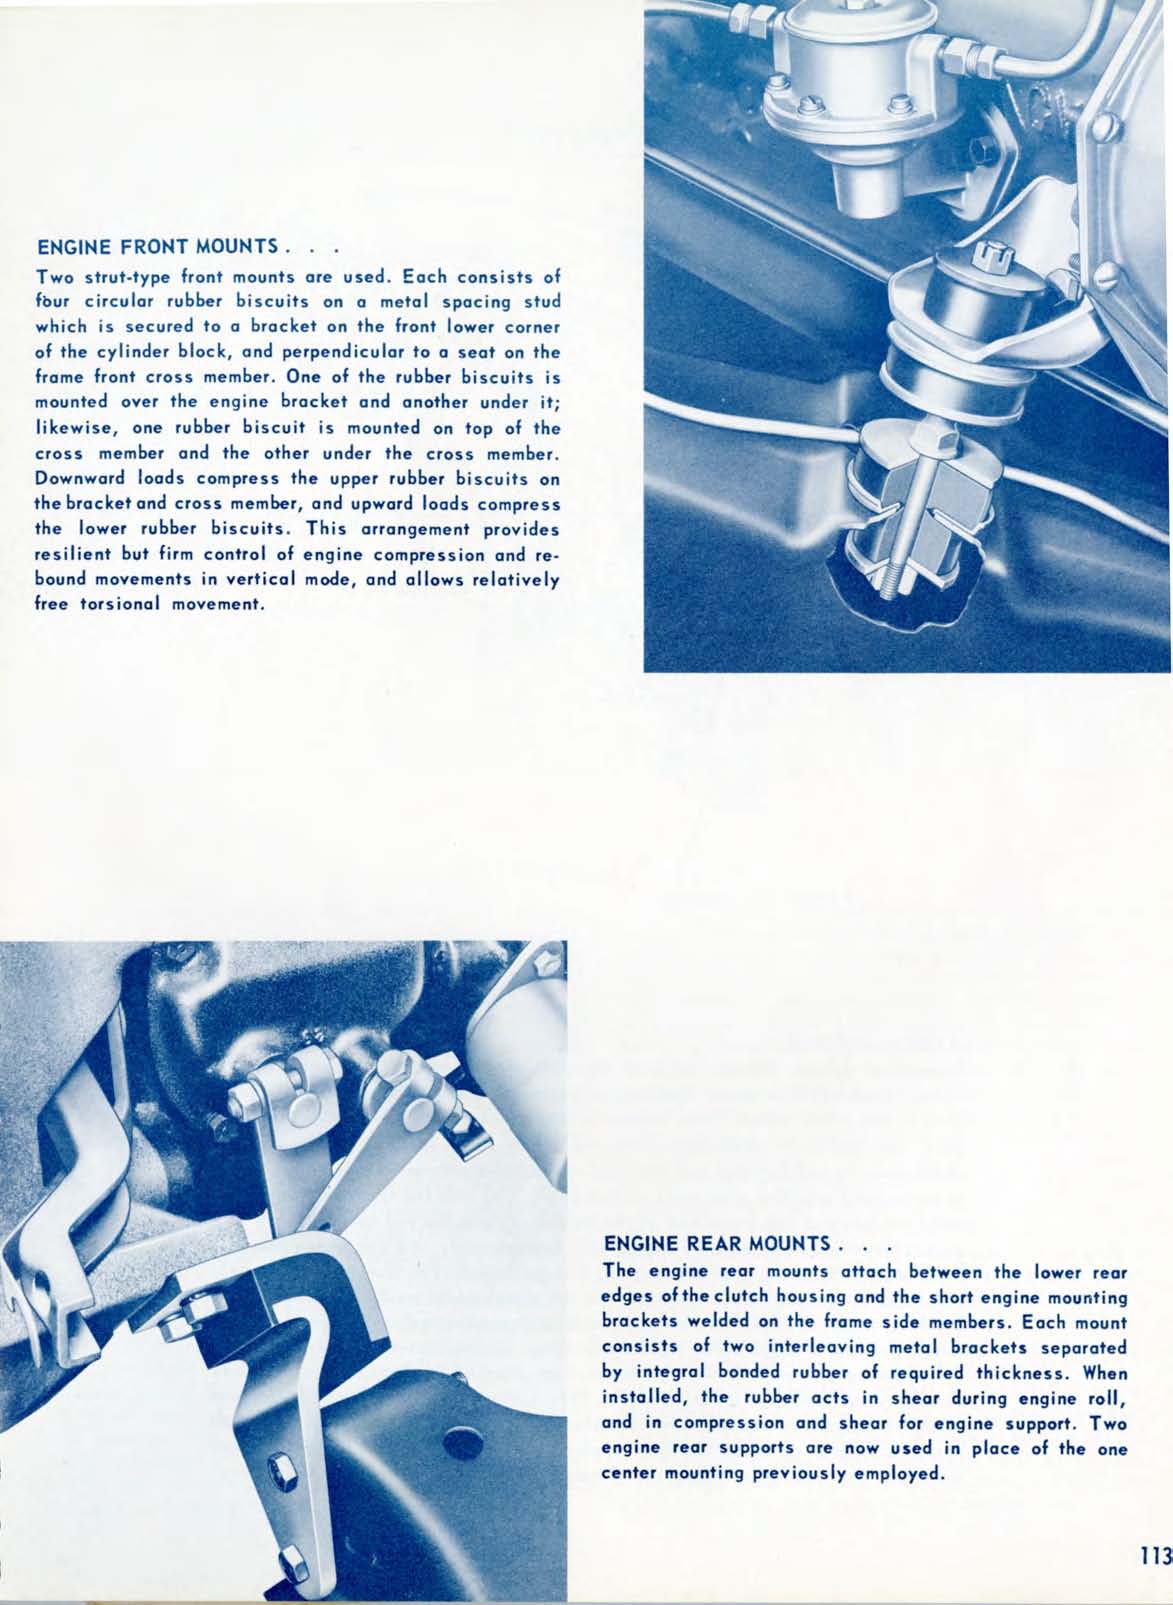 1955_Chevrolet_Engineering_Features-113